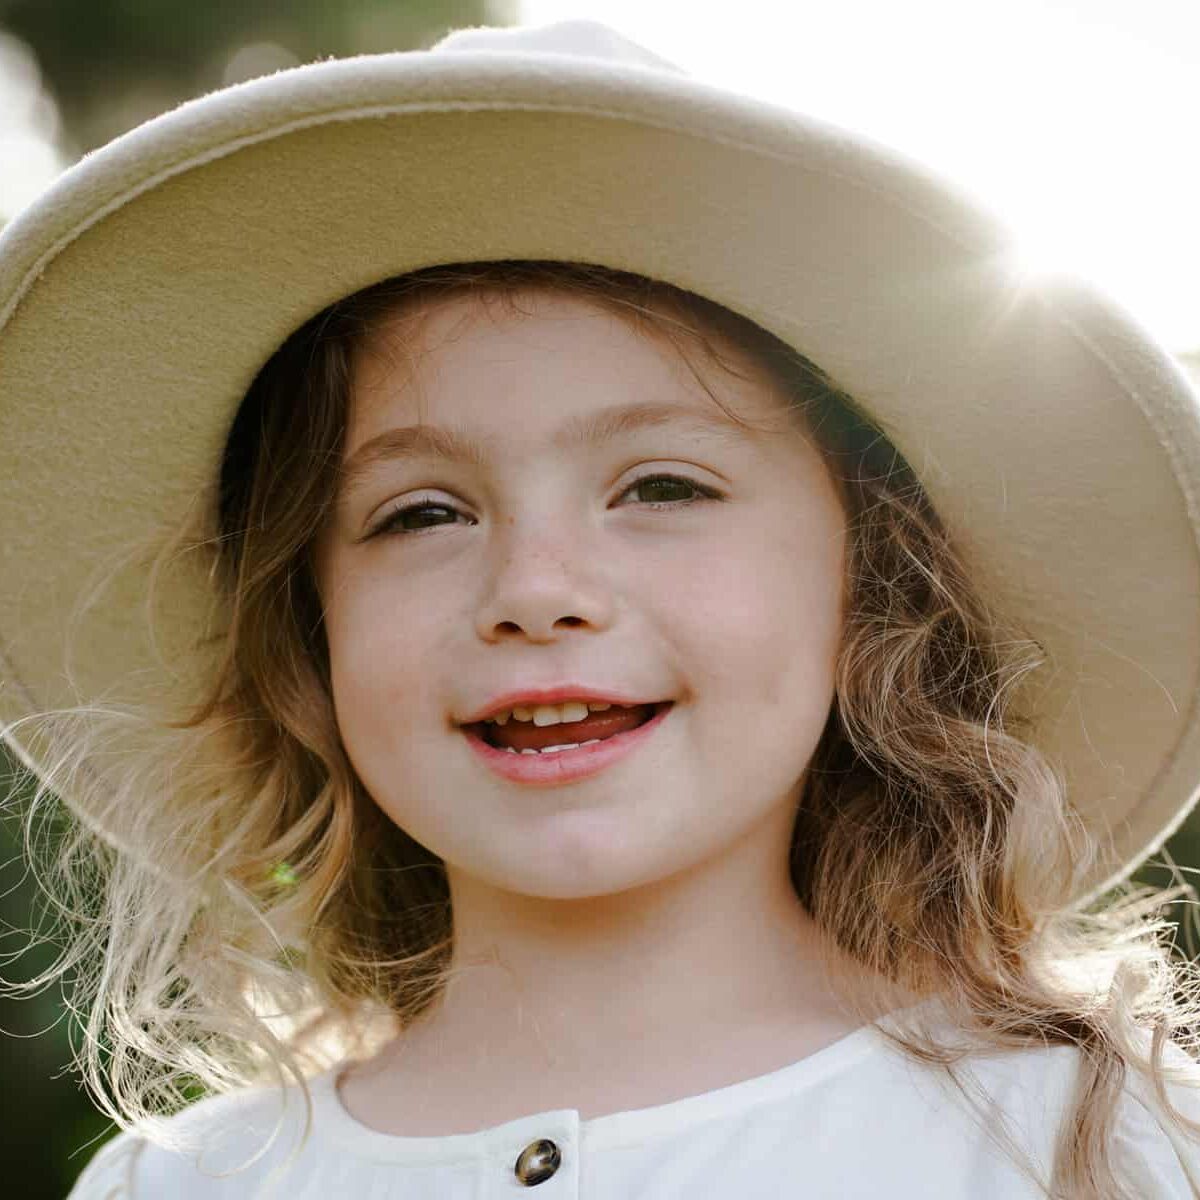 A little girl wearing a white hat.